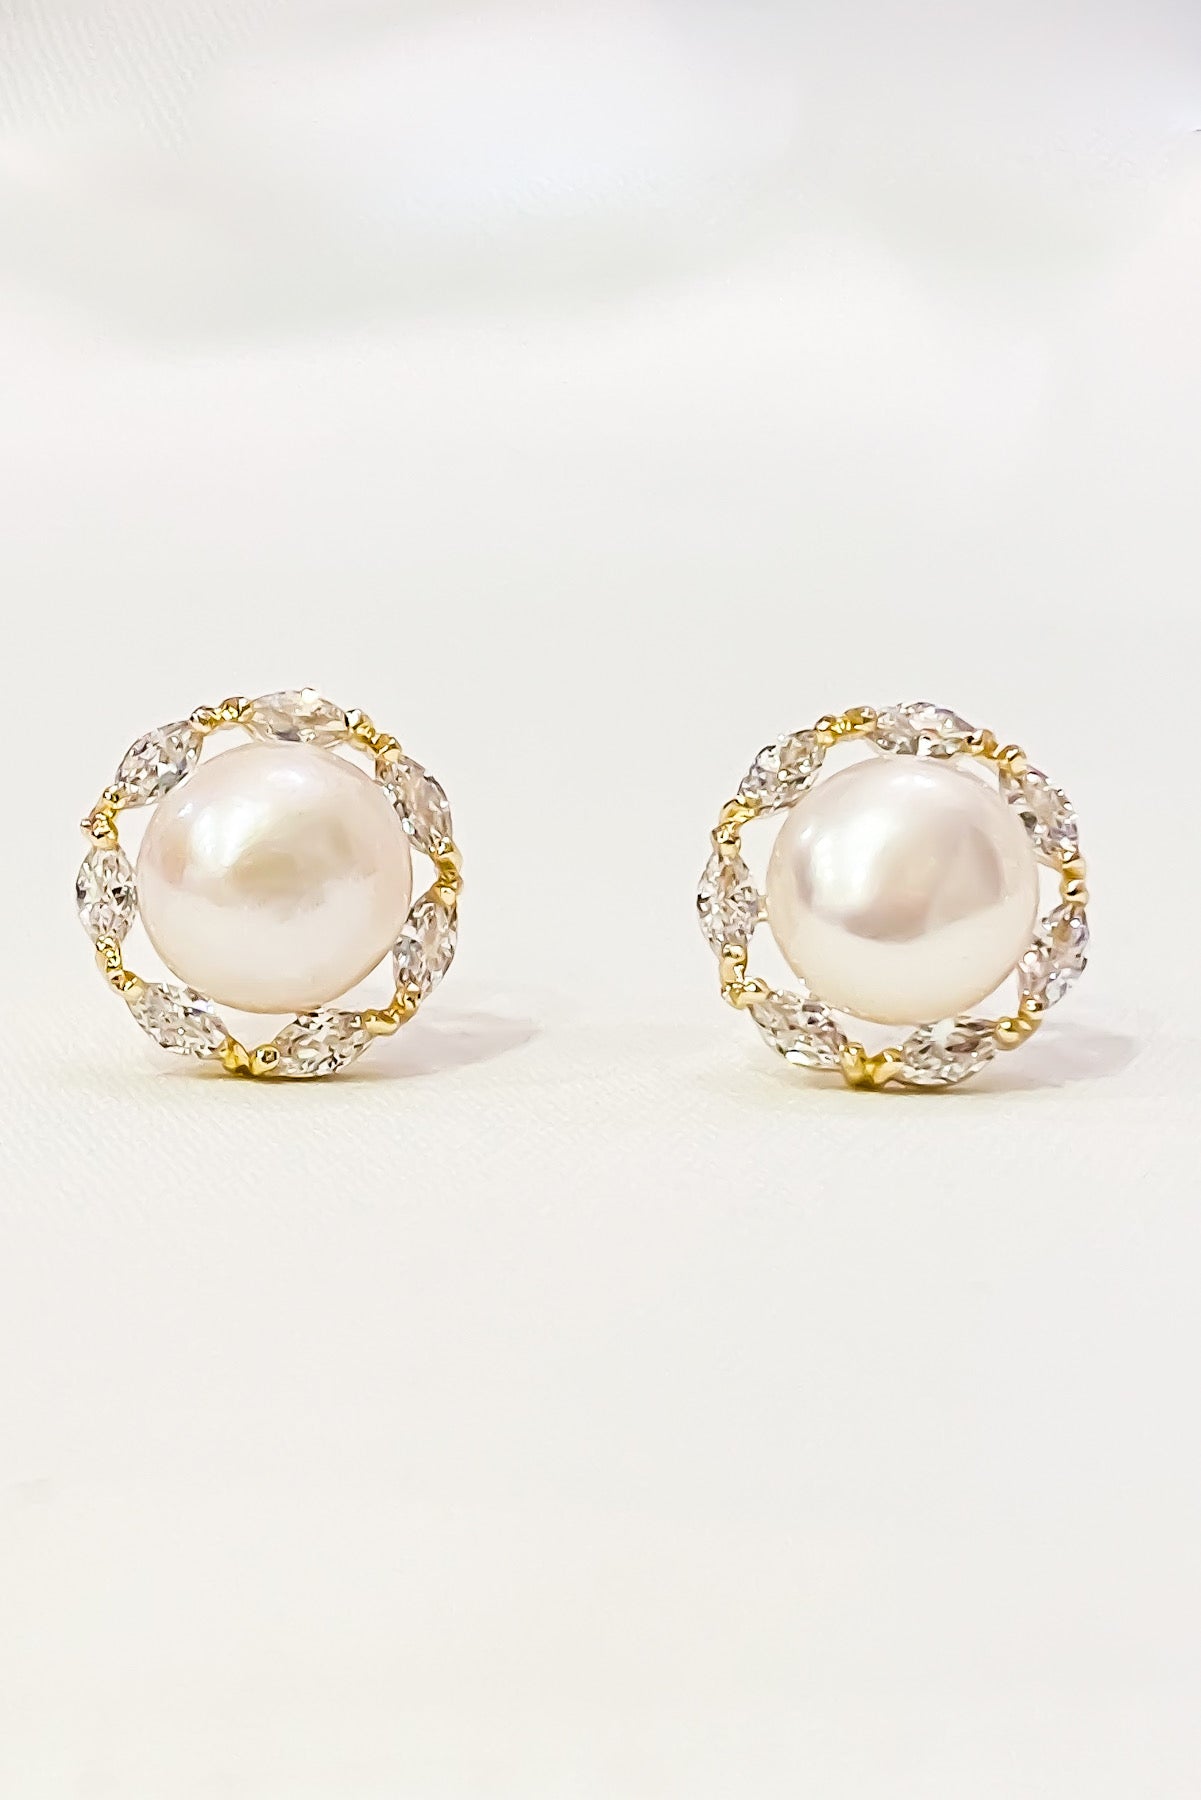 SKYE San Francisco Shop SF Chic Modern Elegant Classy Women Jewelry French Parisian Minimalist Cosette 18K Gold Pearl Earrings 3